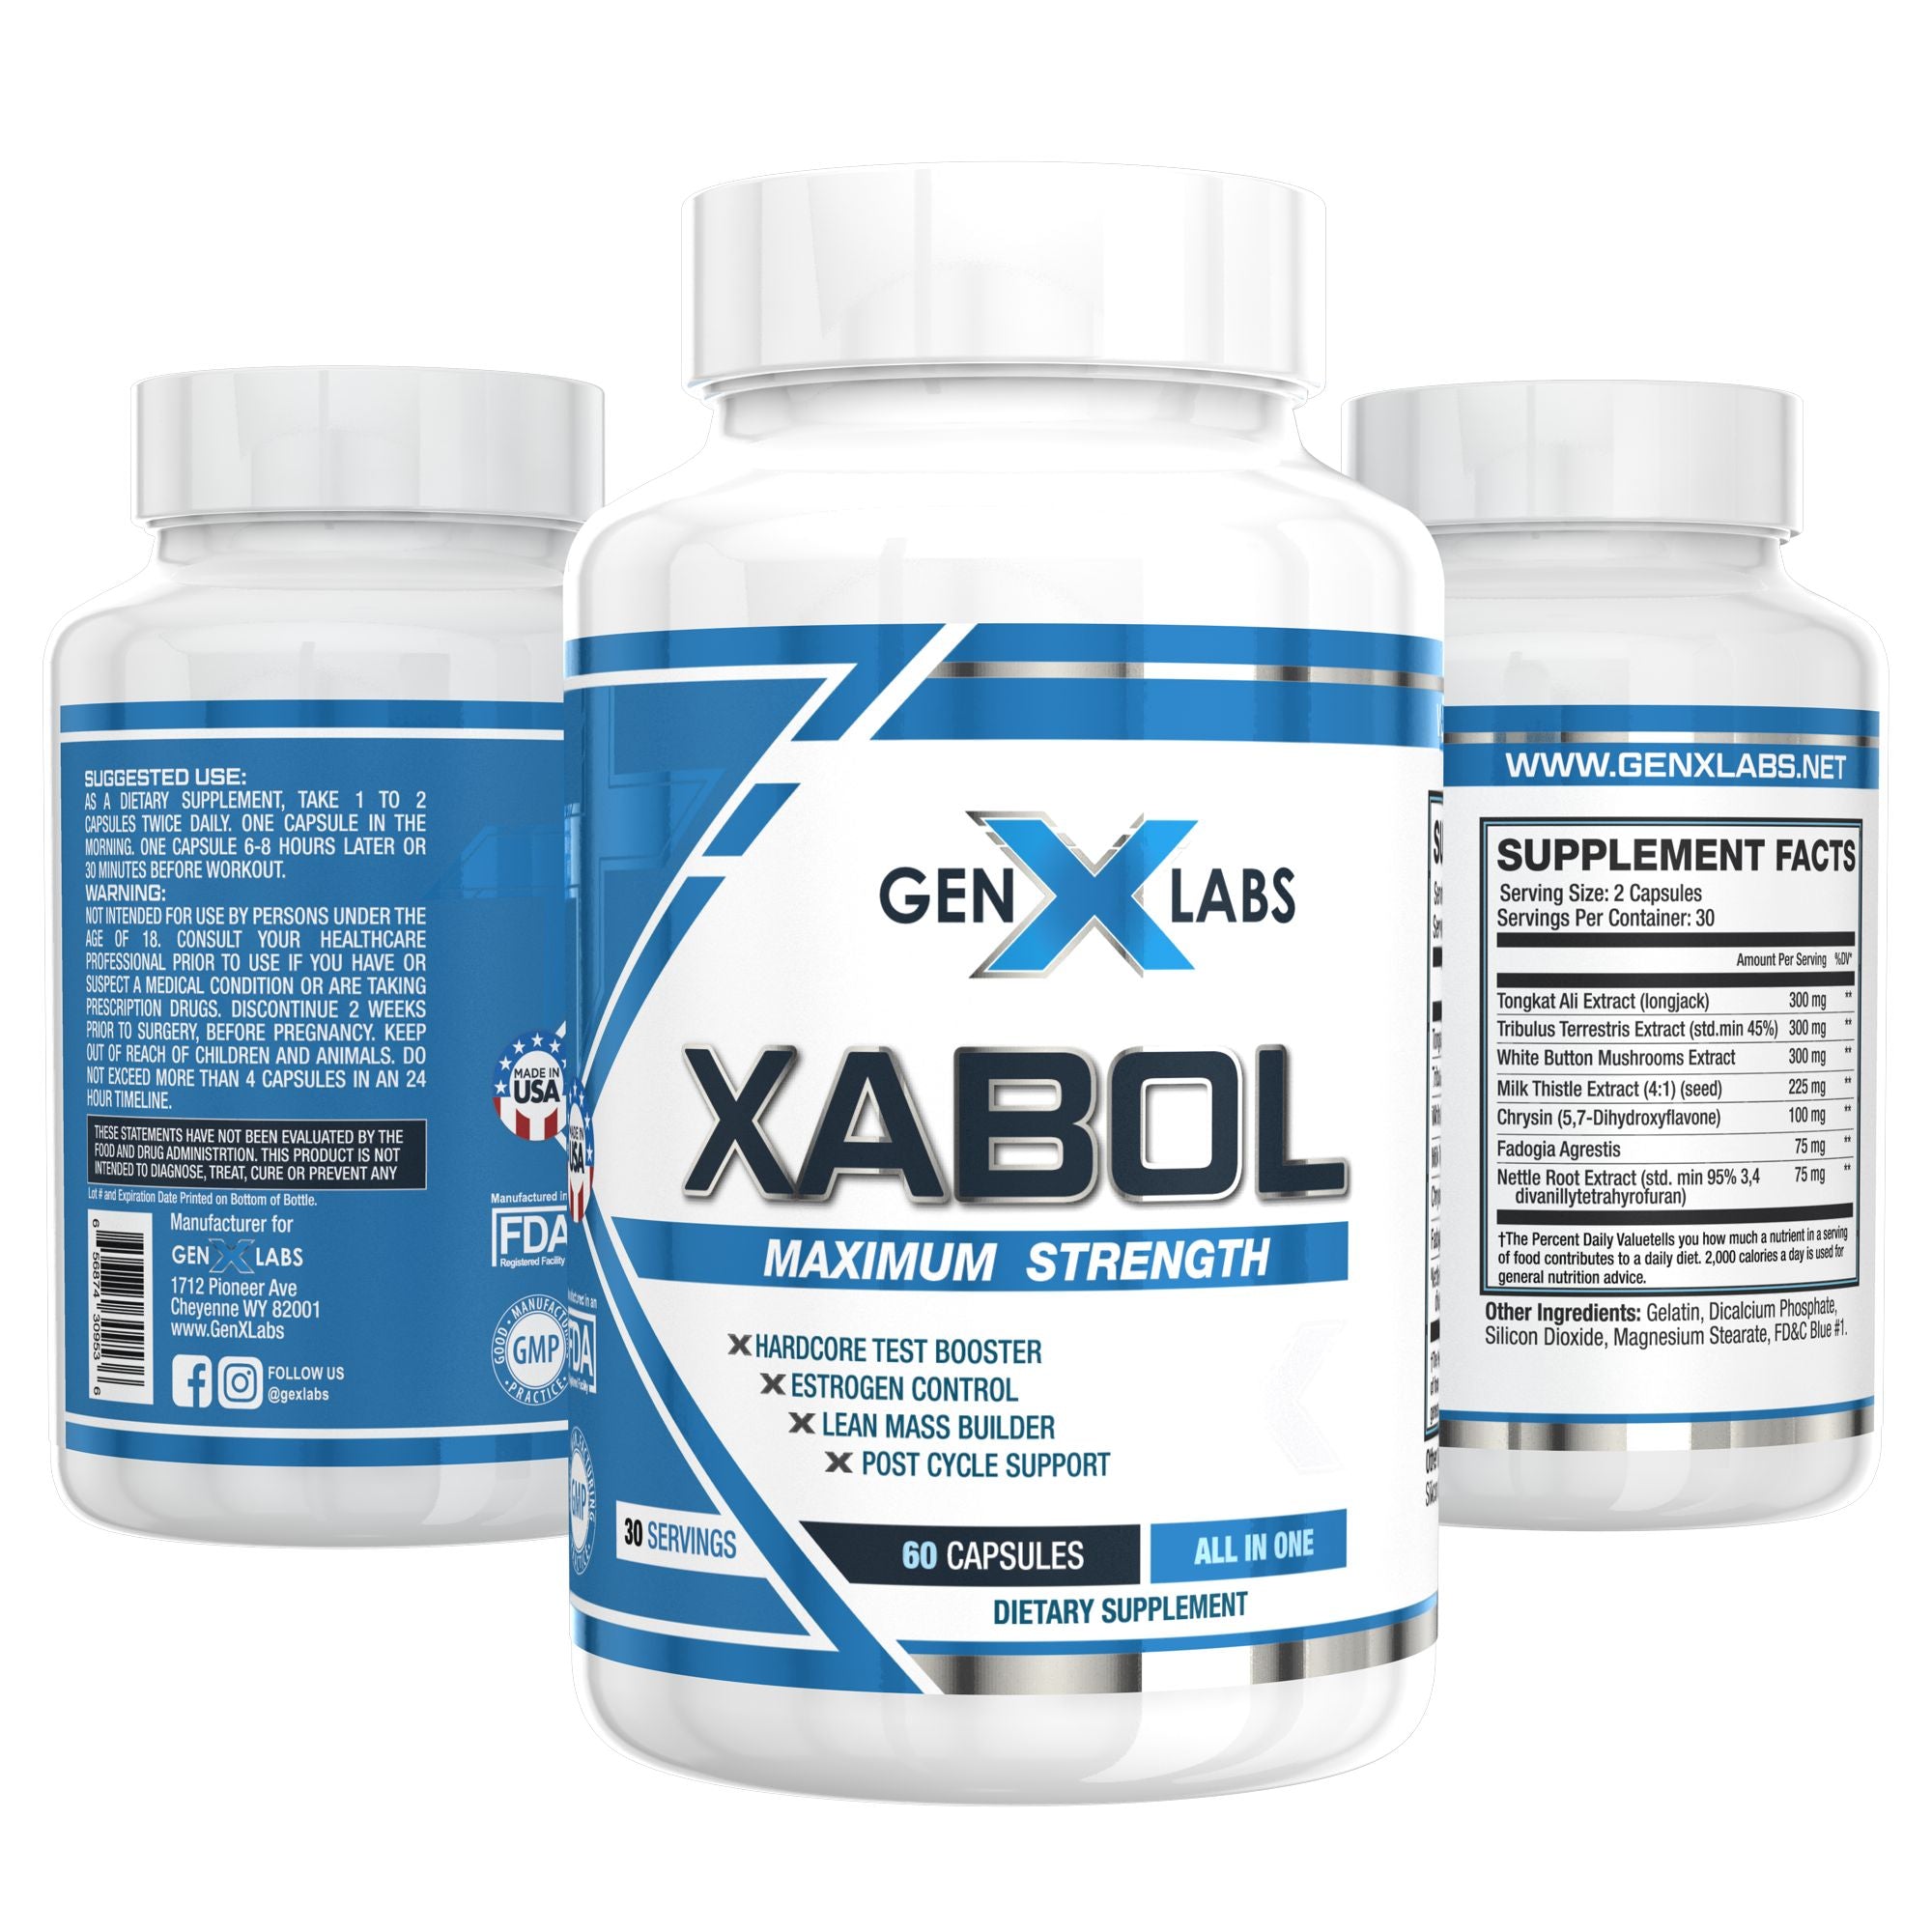 GenXLabs XABOL Maximum Strength Double Pak Free Shirt Offer multi